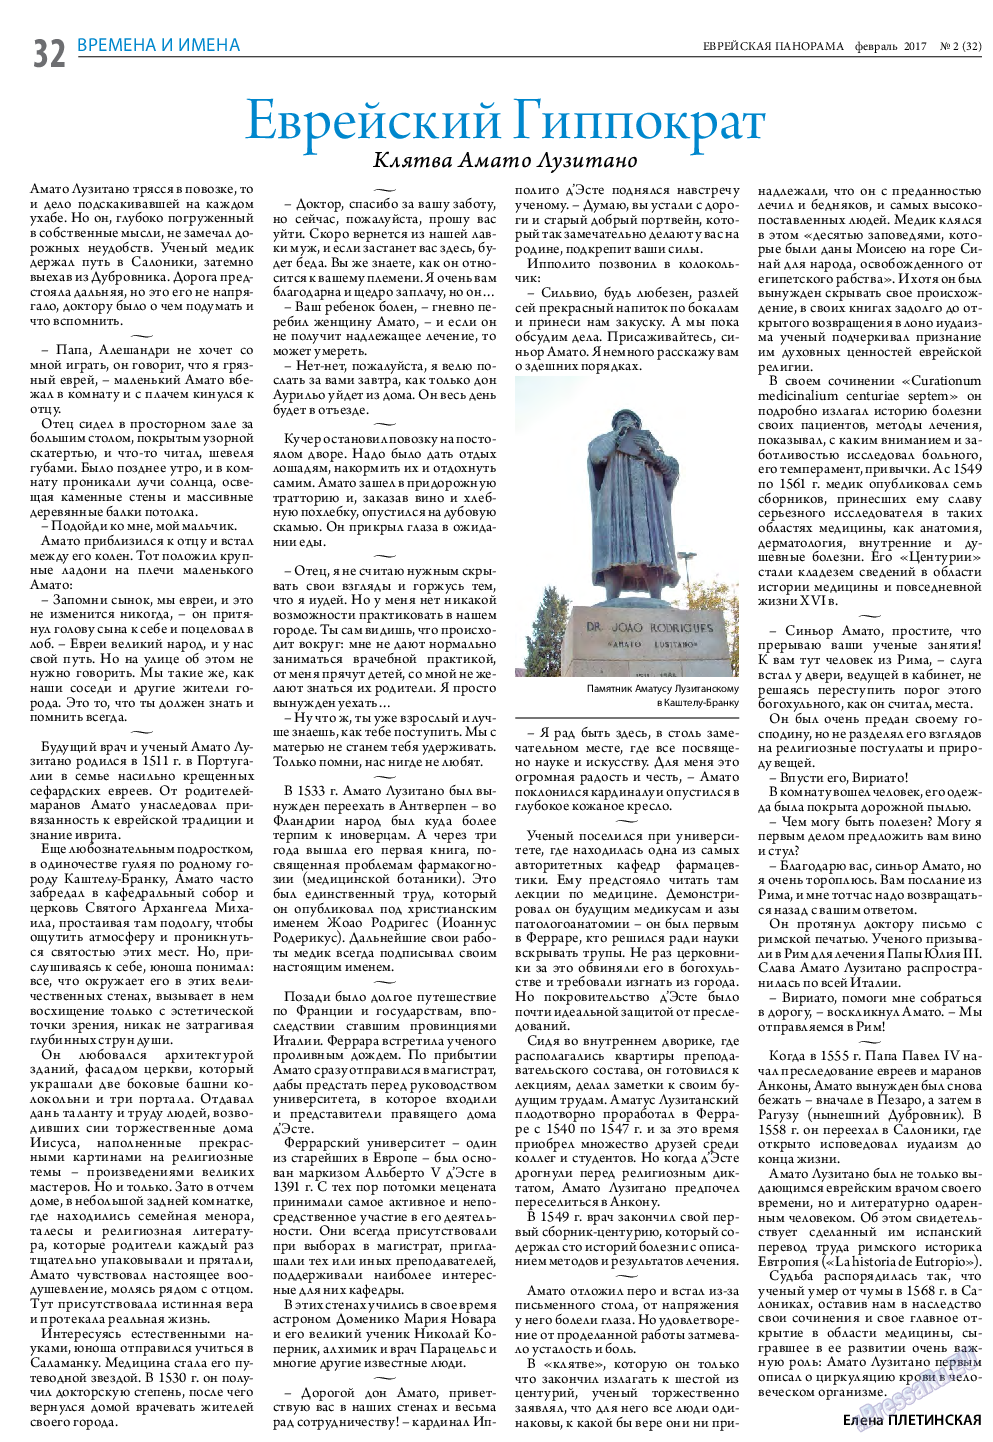 Еврейская панорама, газета. 2017 №2 стр.32